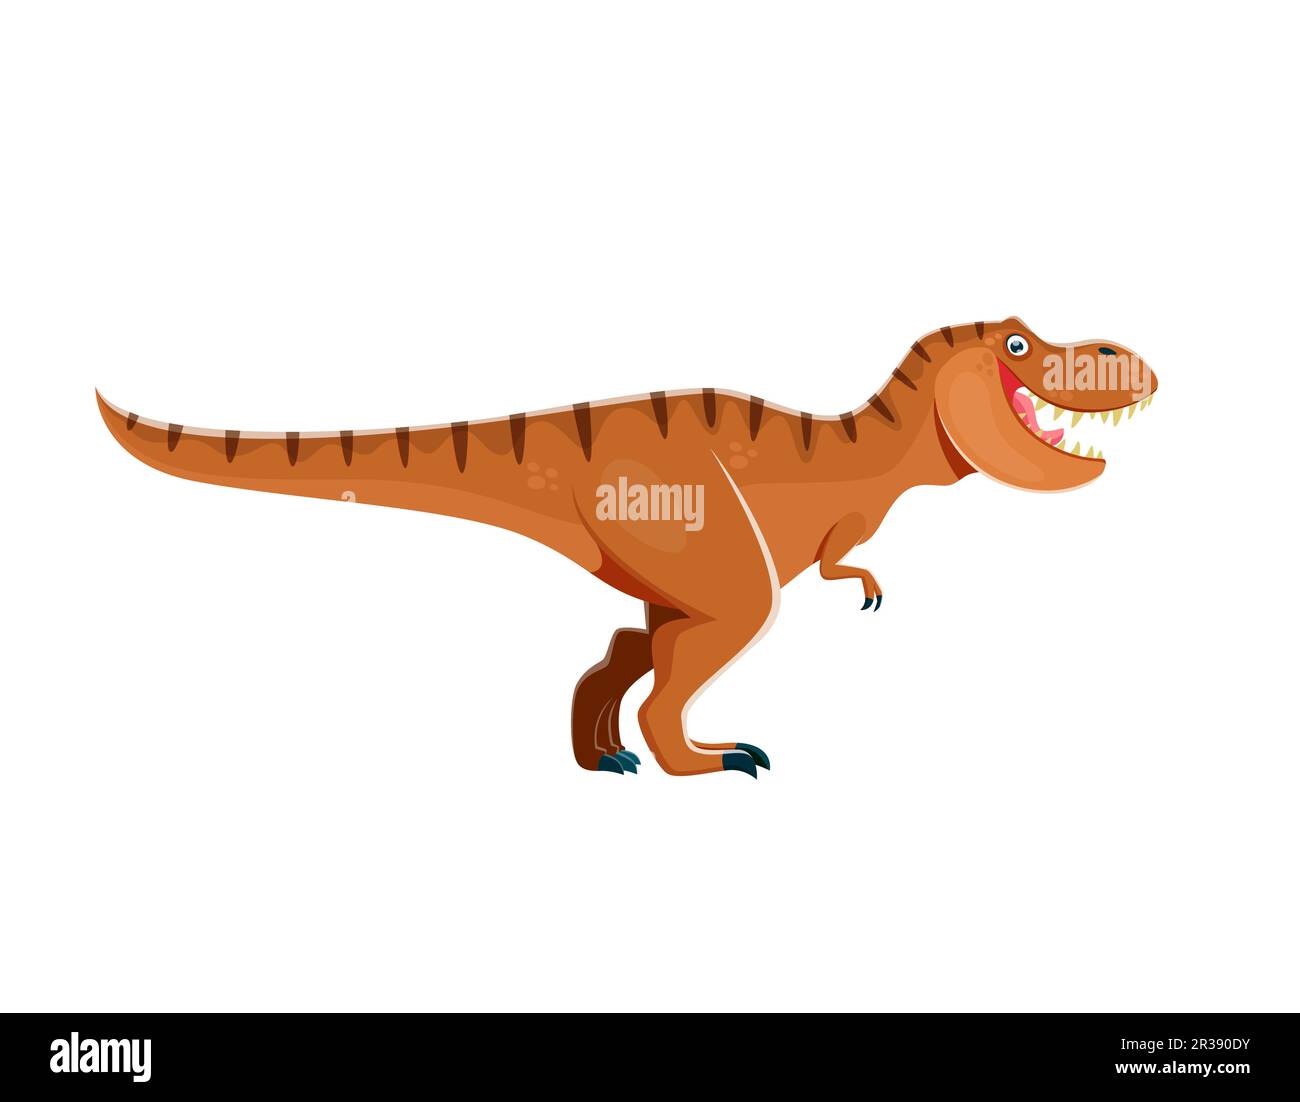 Cartoon Tyrannosaur dinosaur, T-Rex character. Isolated extinct reptile, paleontology predator dinosaur with sharp teeth. Mesozoic era monster, carnivorous lizard vector cute personage Stock Vector